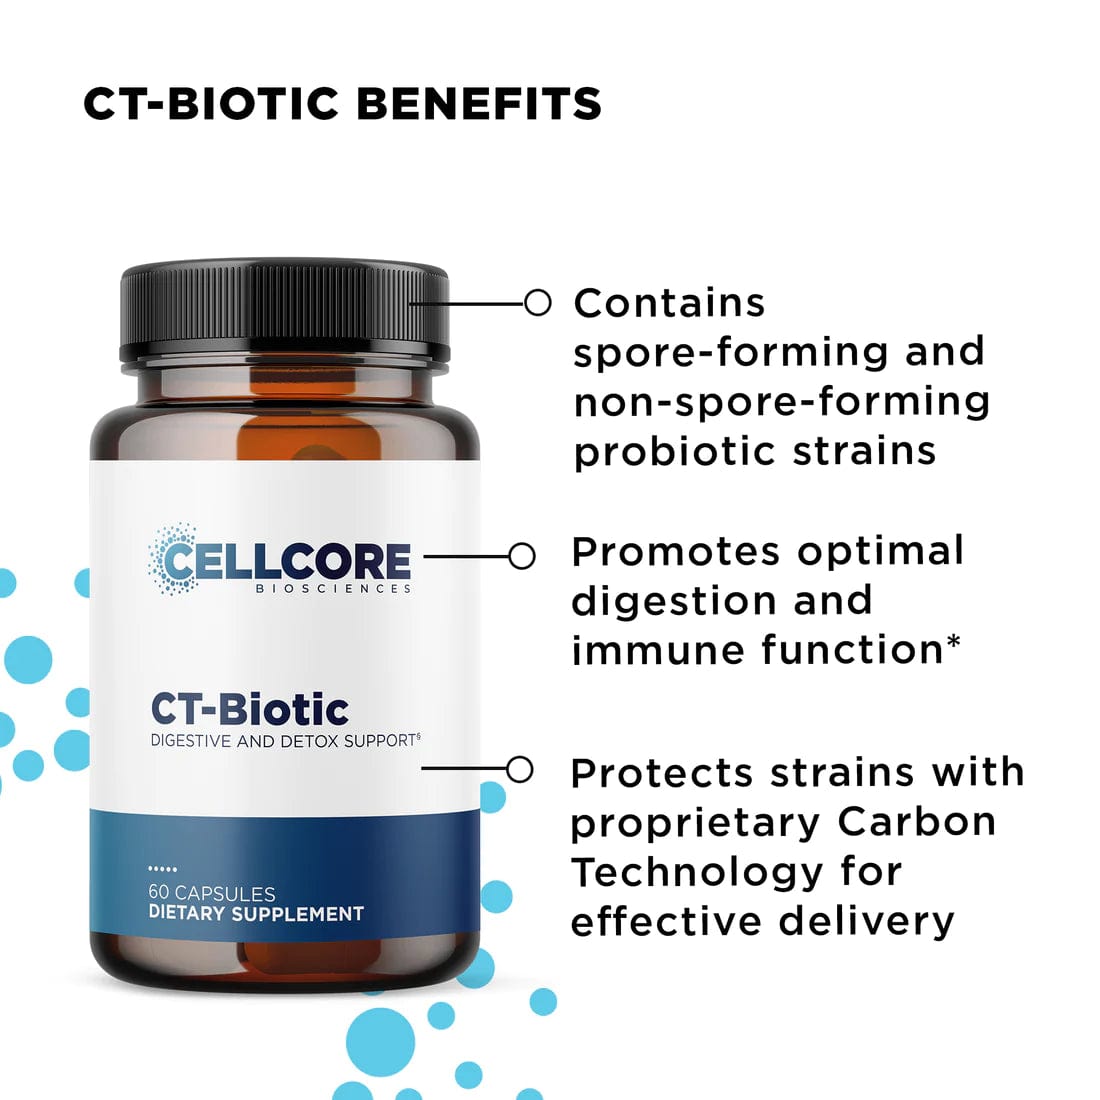 CellCore Biosciences Nutritional Stomach Support Kit by CellCore Biosciences